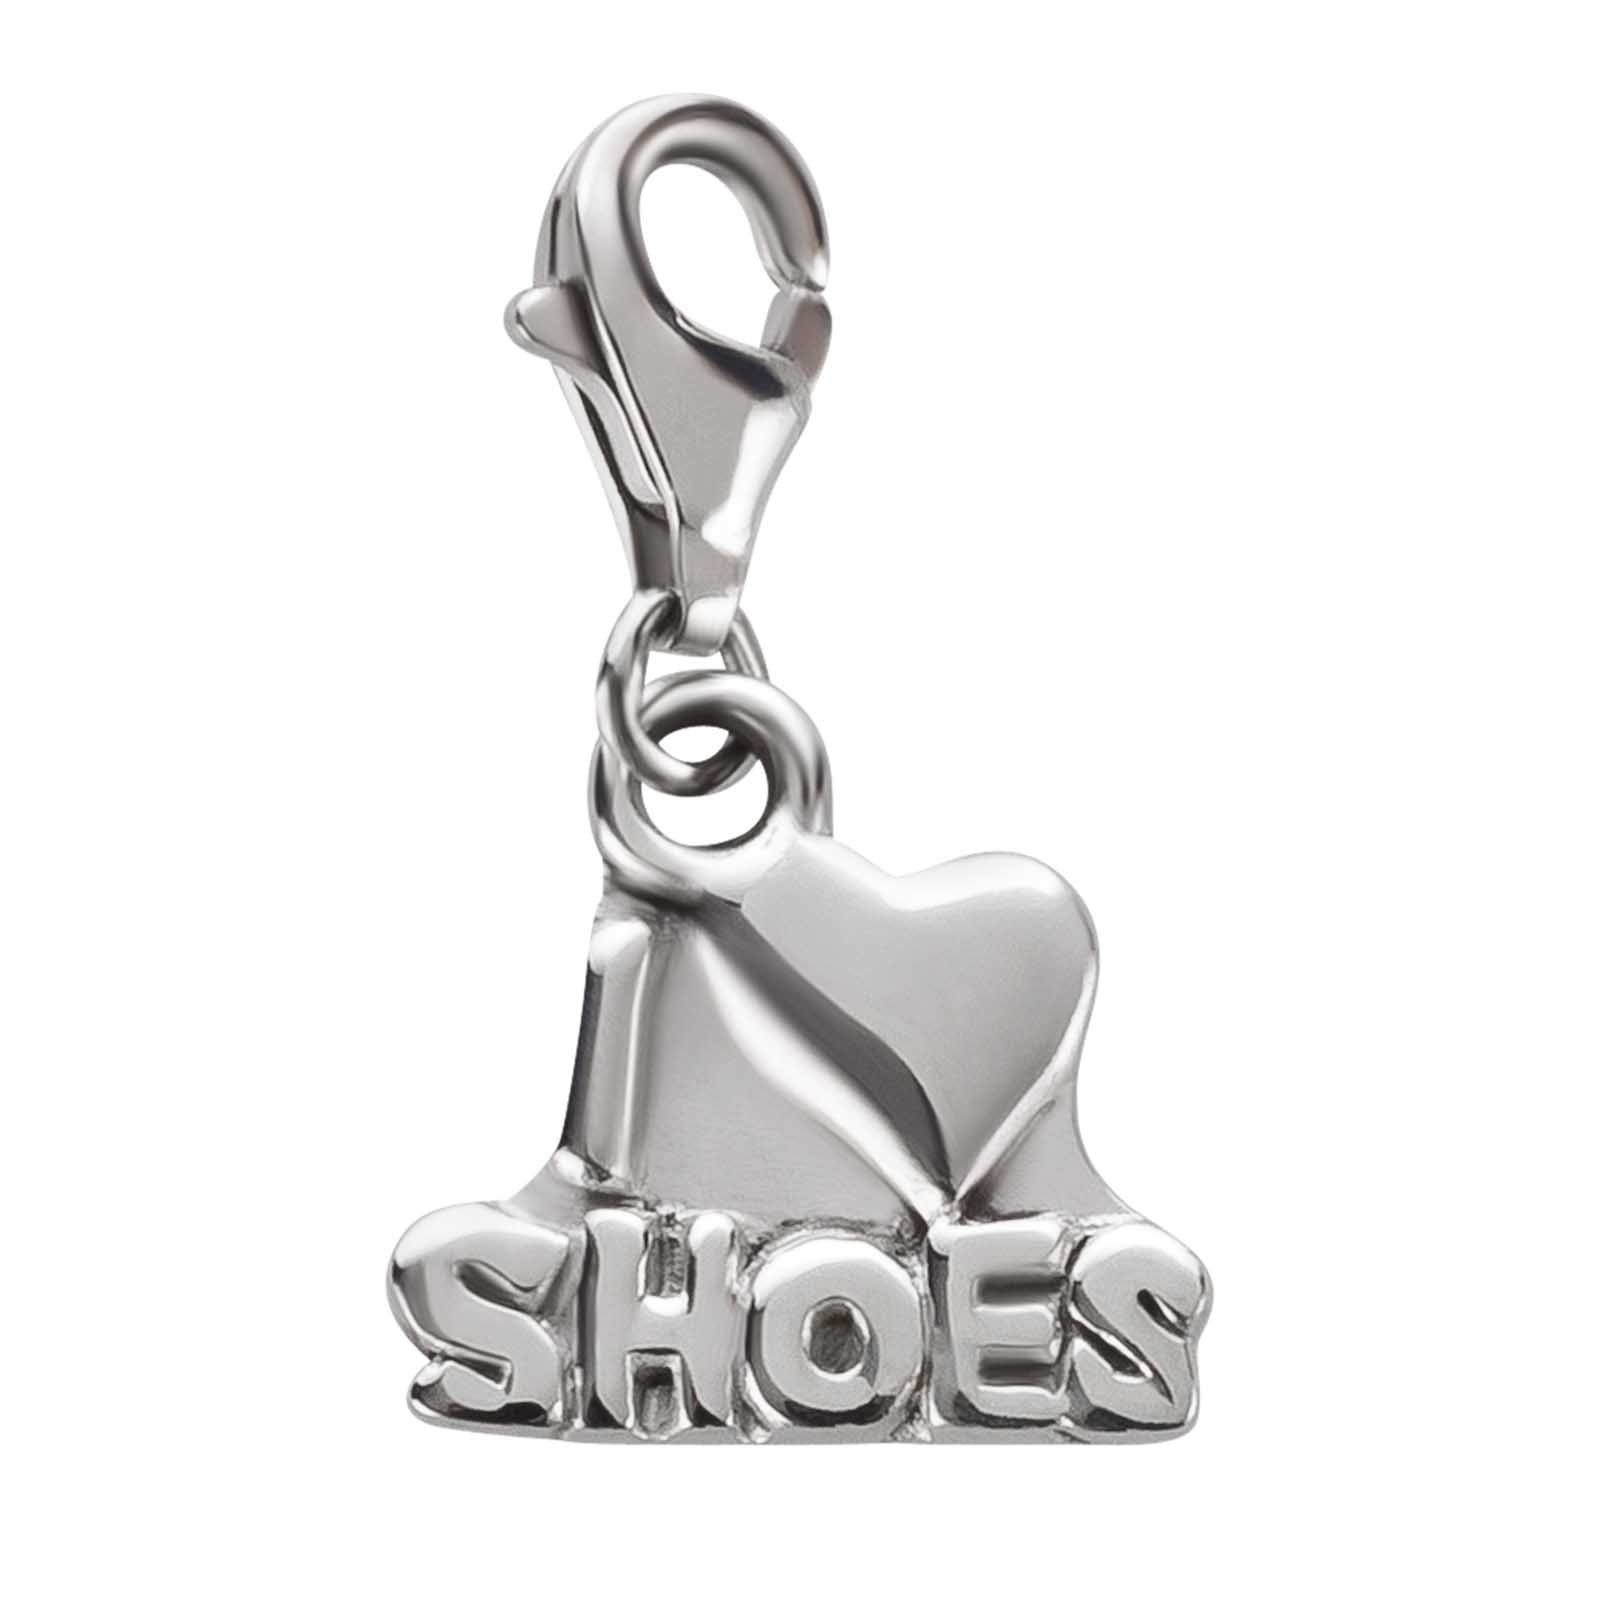 schmuck23 Charm-Einhänger Charm Anhänger I love shoes 925 Silber Kettenanhänger (1-tlg), Für Armband, Halskette oder Schlüsselanhänger | Charm-Anhänger